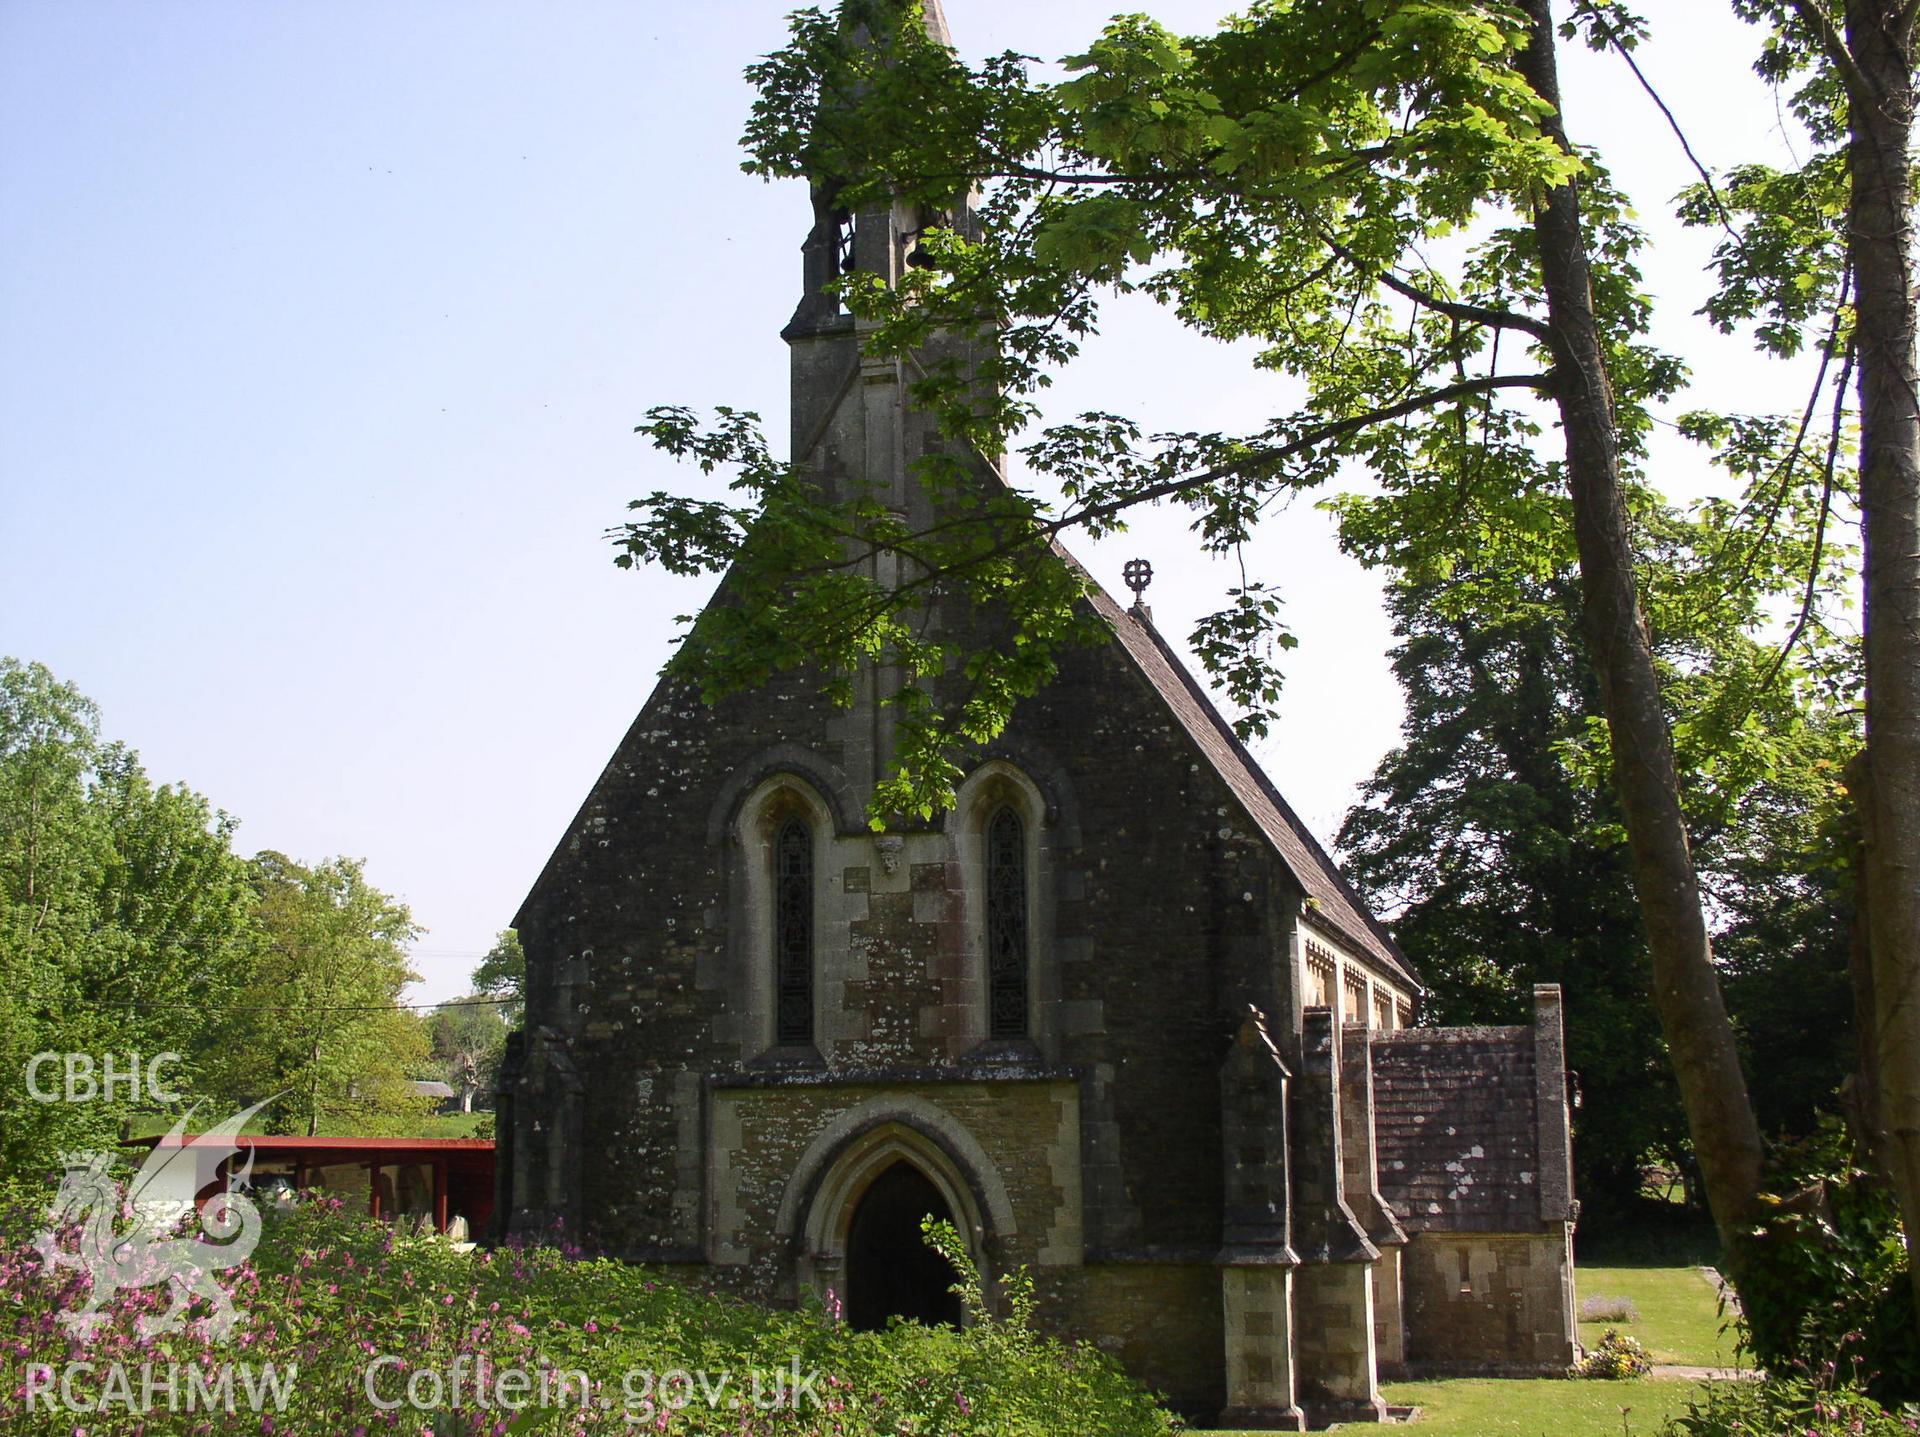 Colour digital photograph showing the exterior of St Teilo's Church, Merthyr Mawr; Glamorgan.